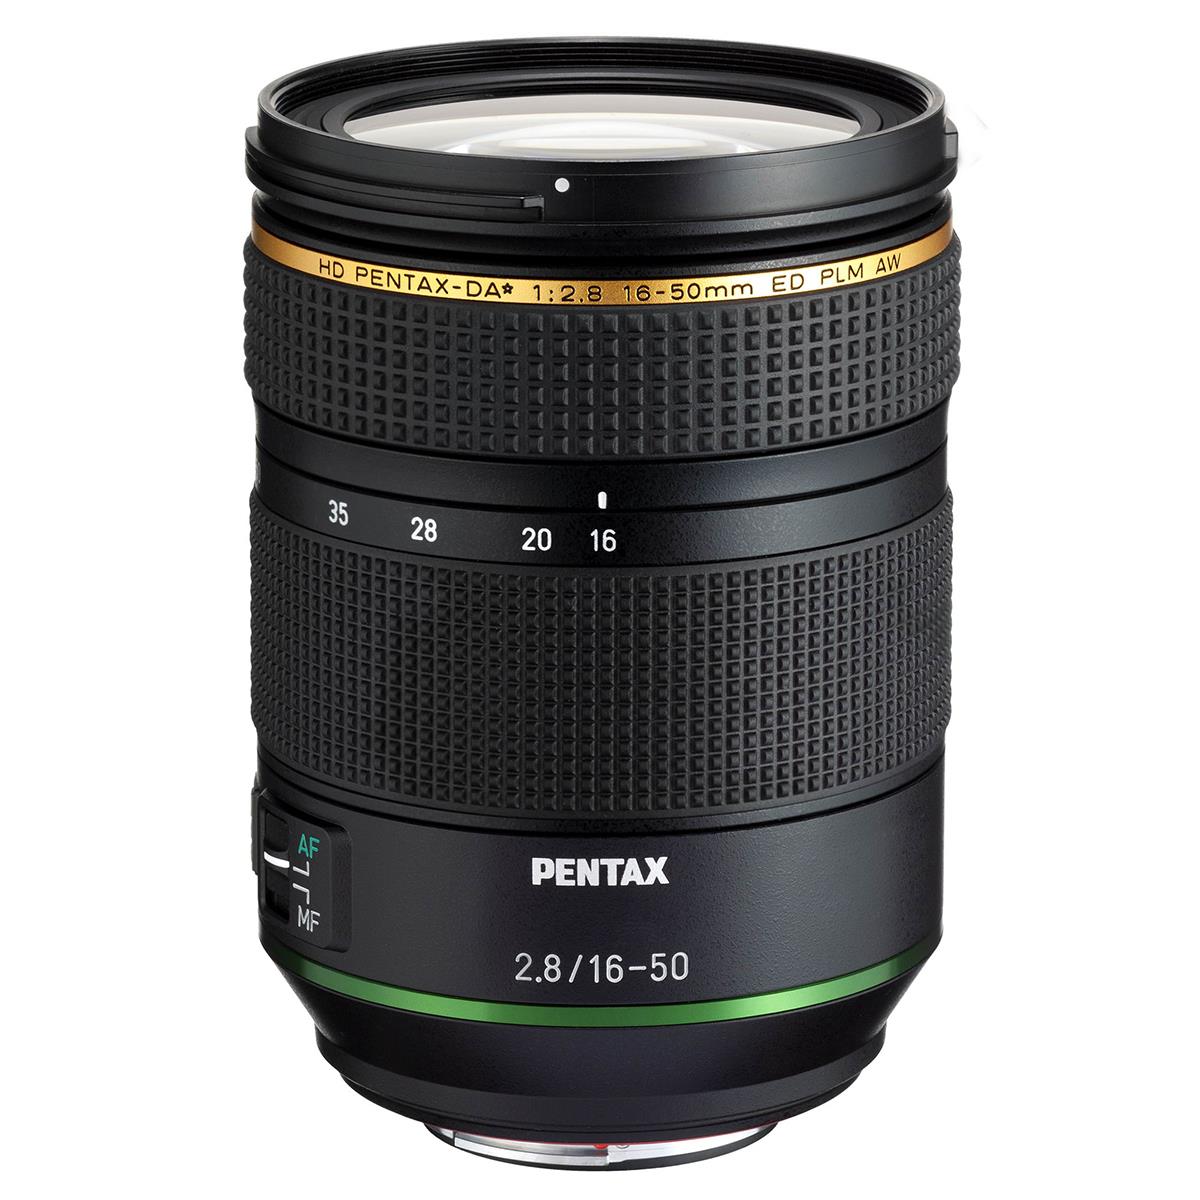 Image of Pentax HD Pentax-DA 16-50mm f/2.8 ED PLM AW Lens